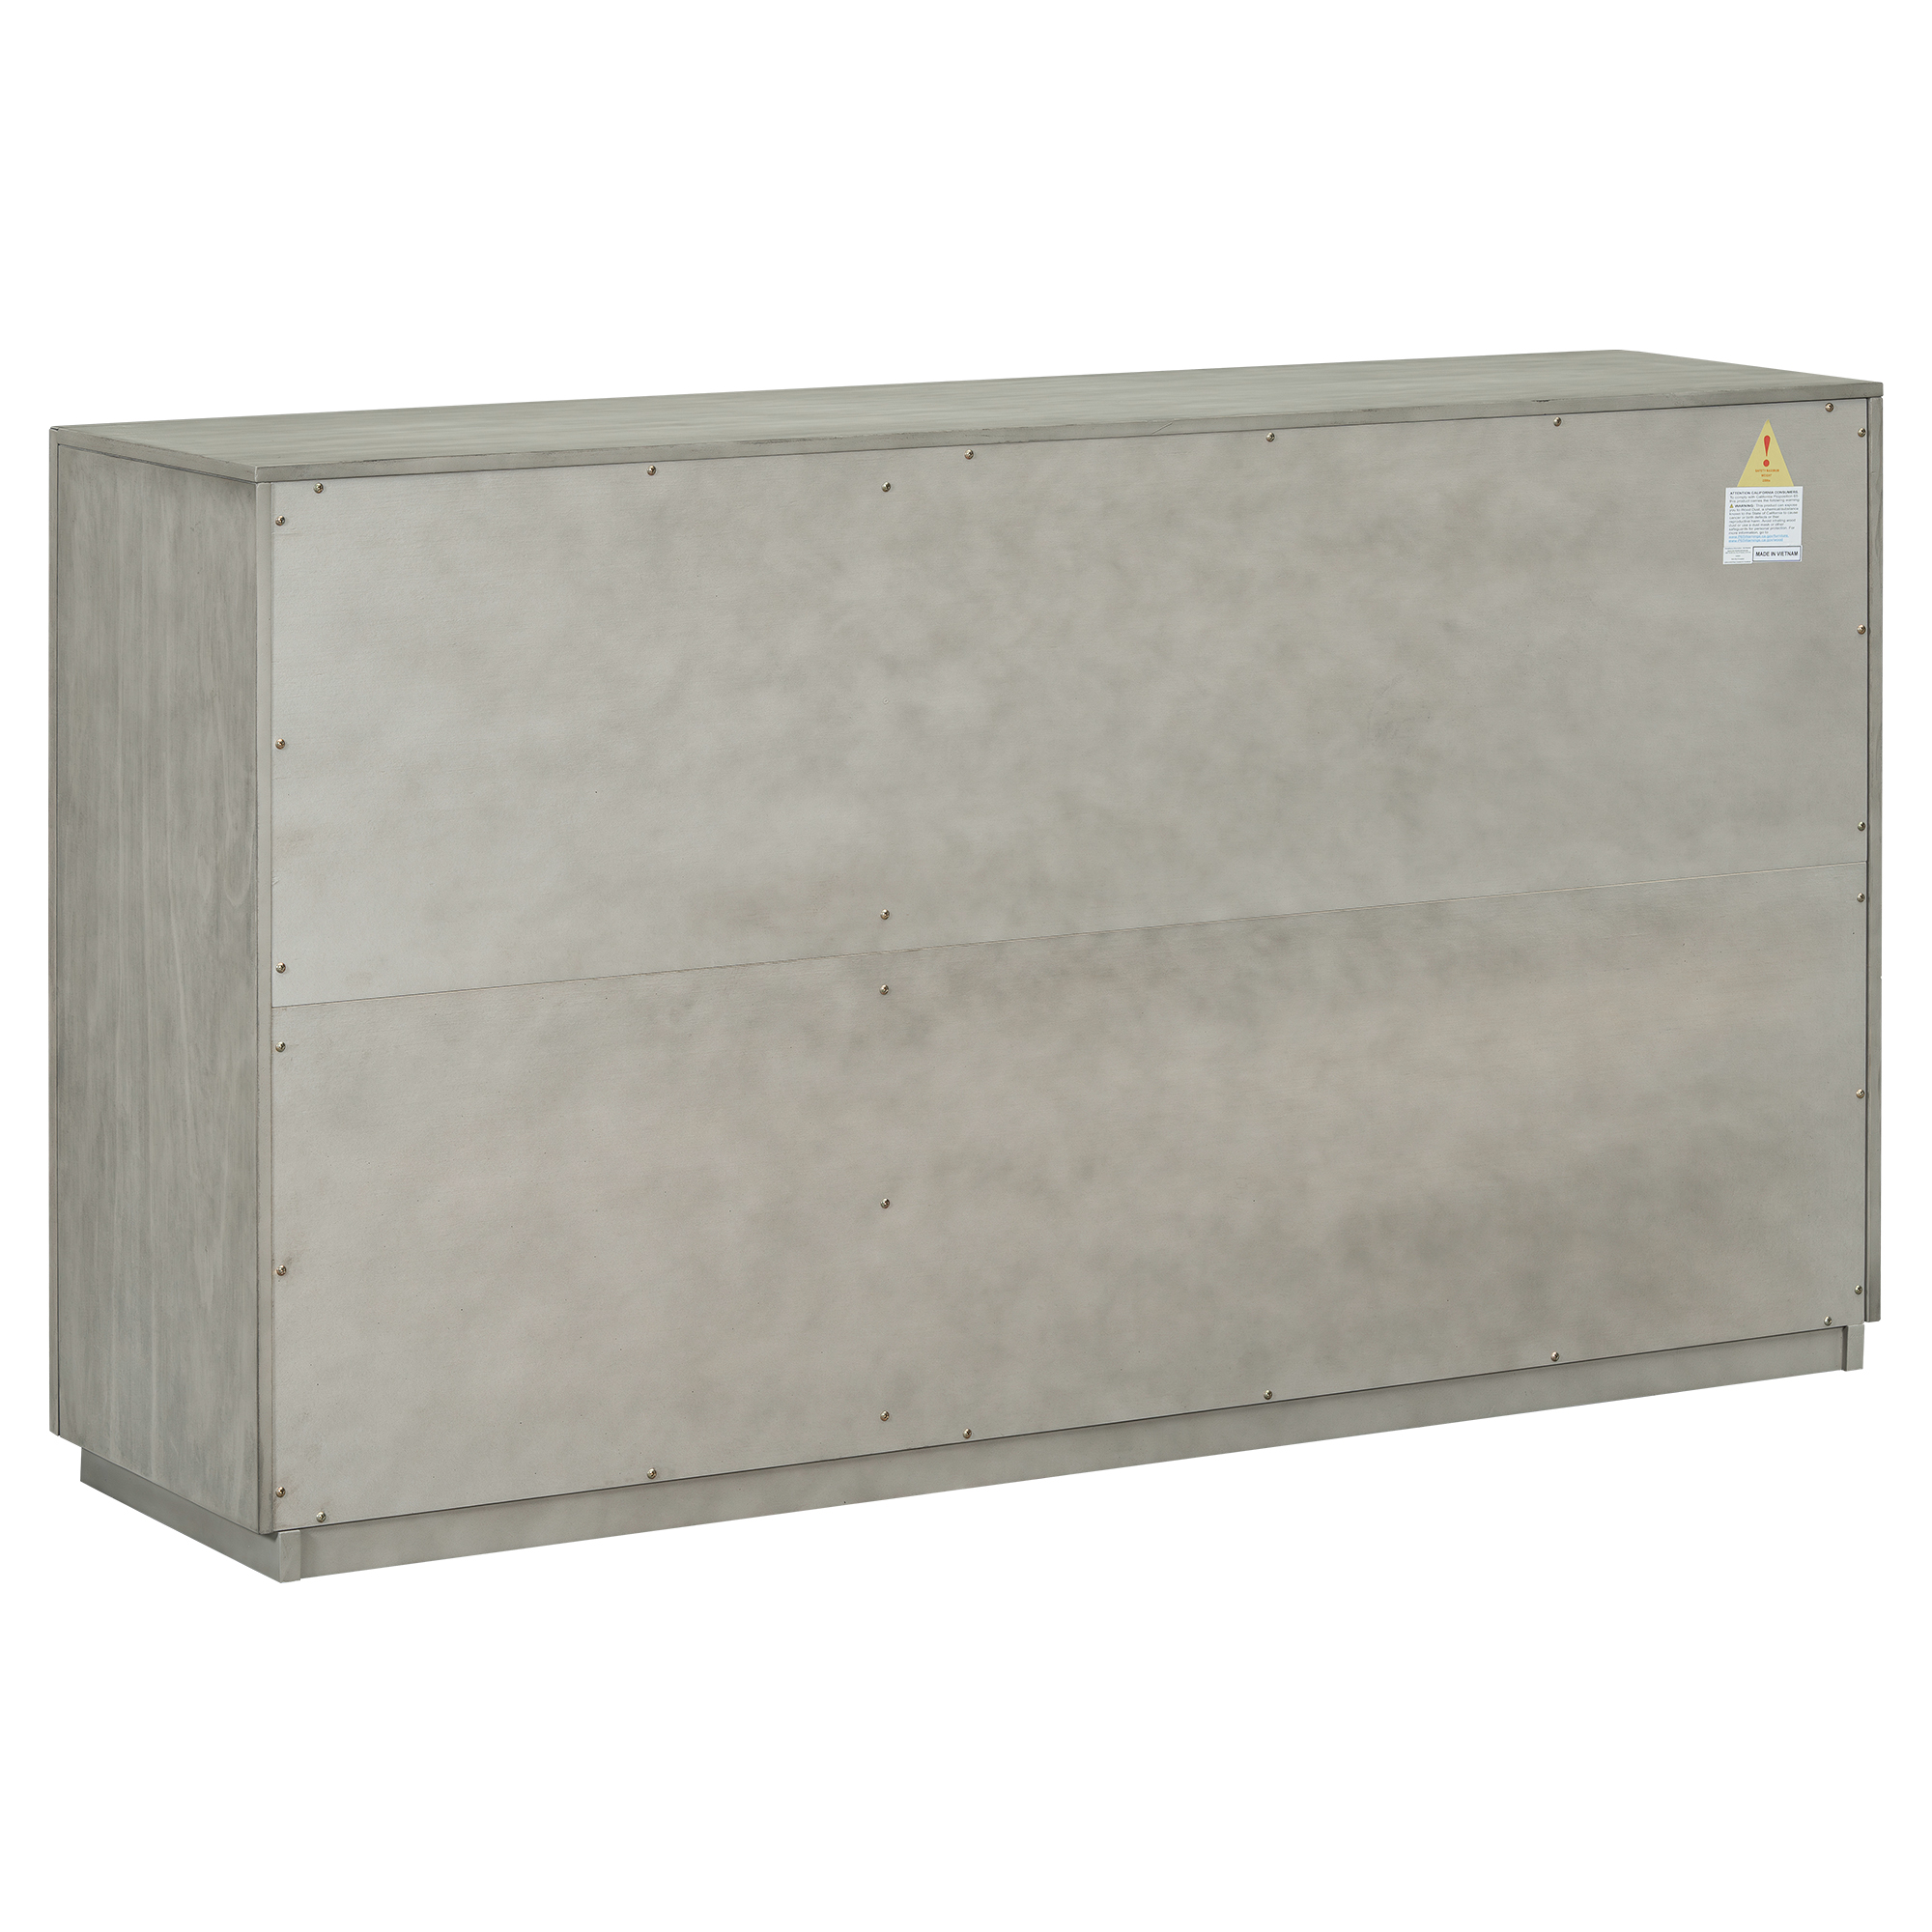 3-Door Large Storage Retro Sideboard with Adjustable Shelves and Black Handles - XW000017AAE